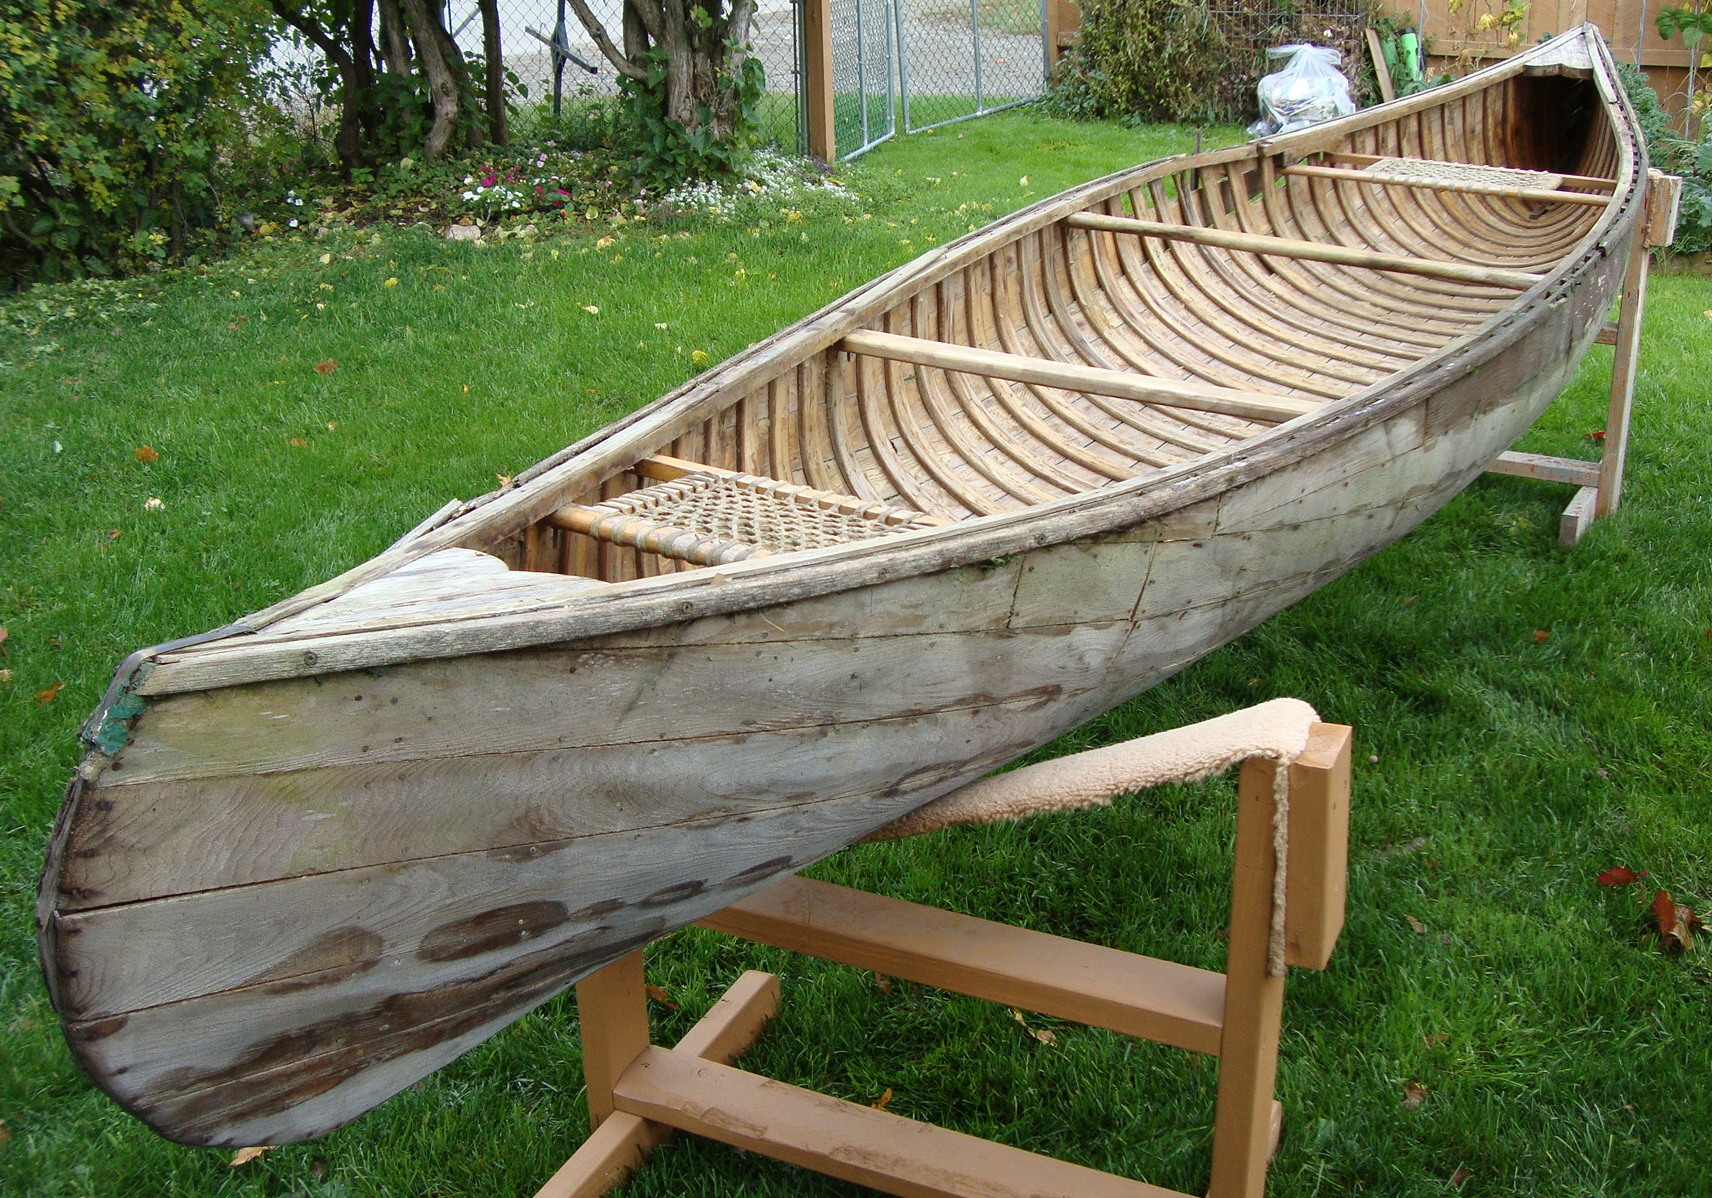 Wood-Canvas Canoes â€